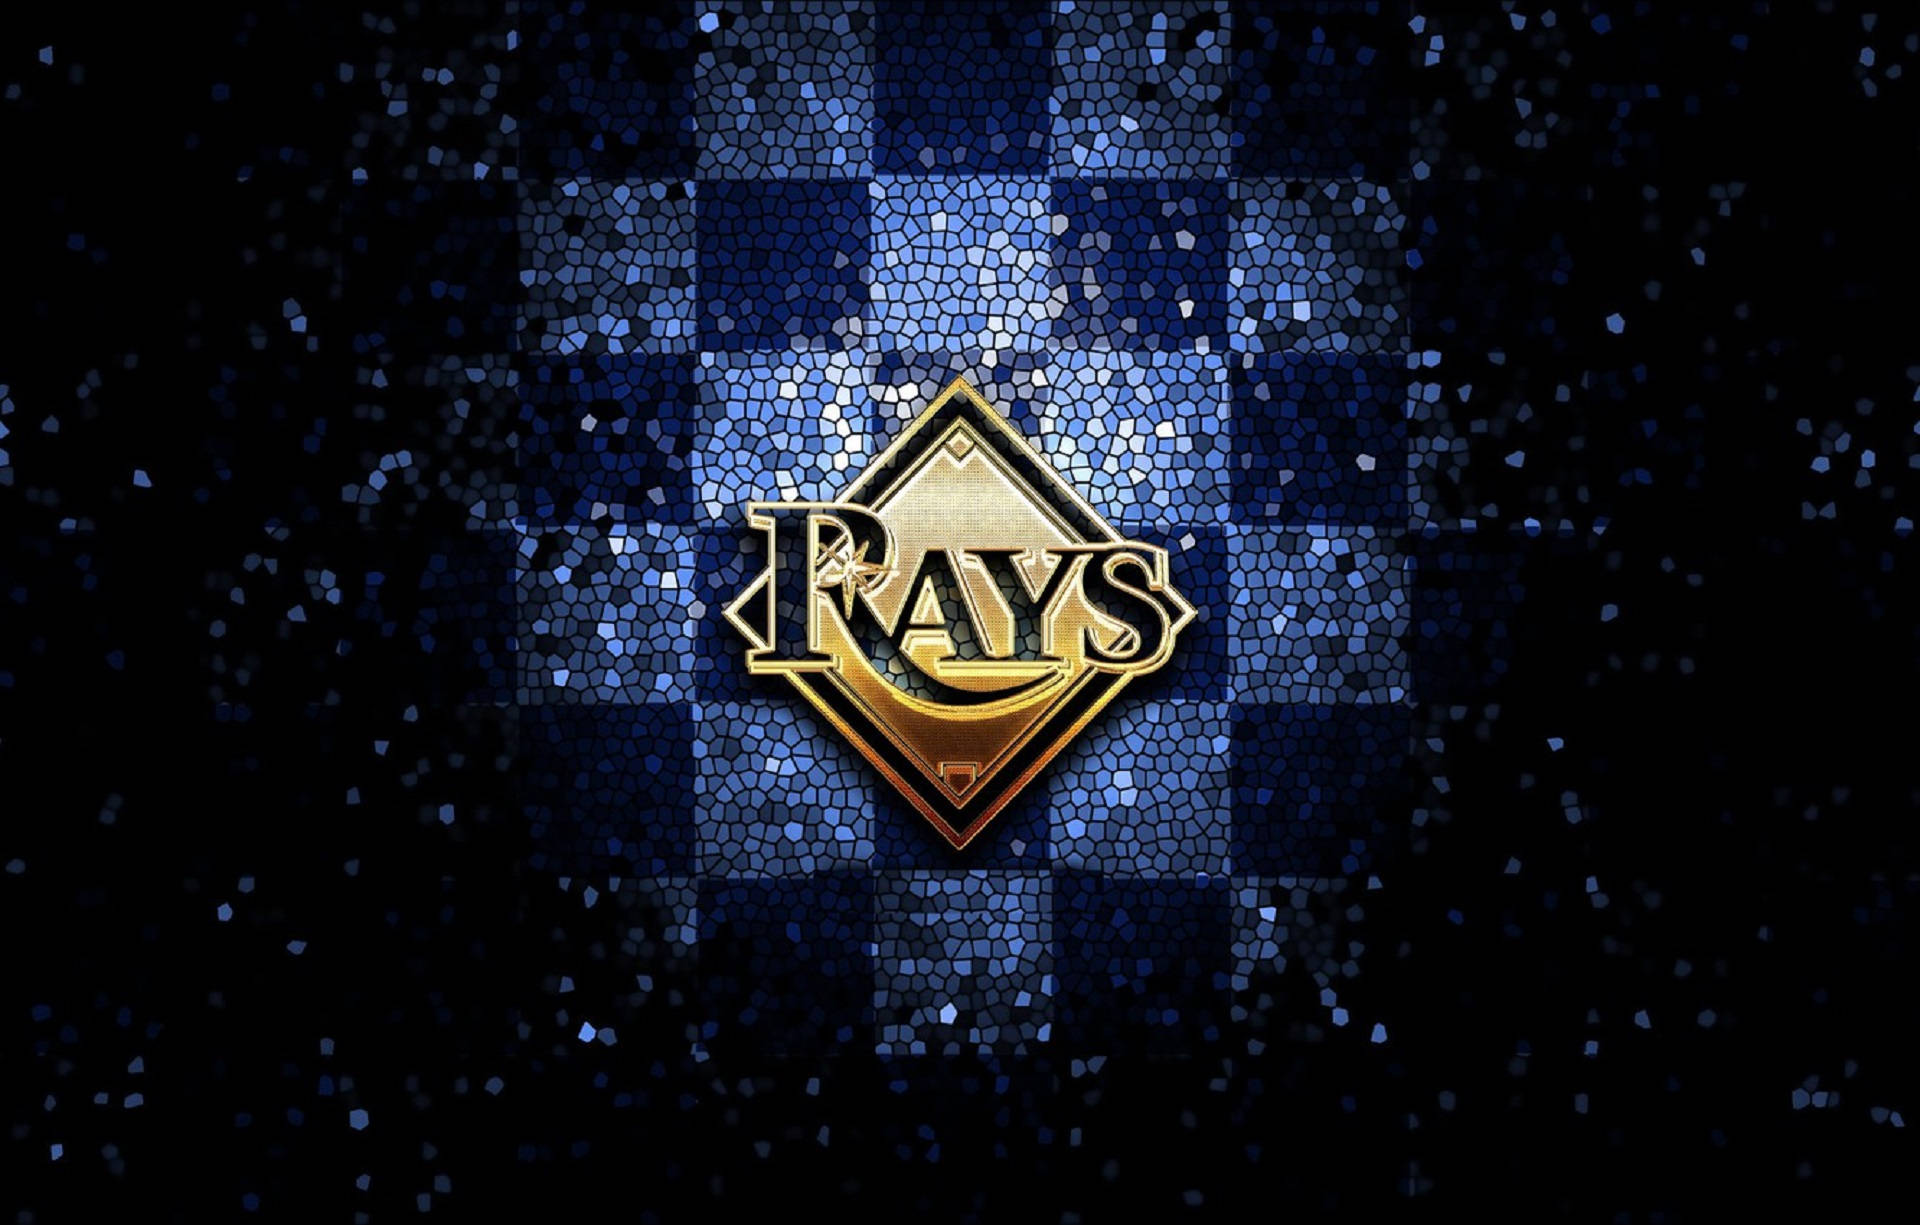 Tampa Bay Rays Gold Emblem Wallpaper